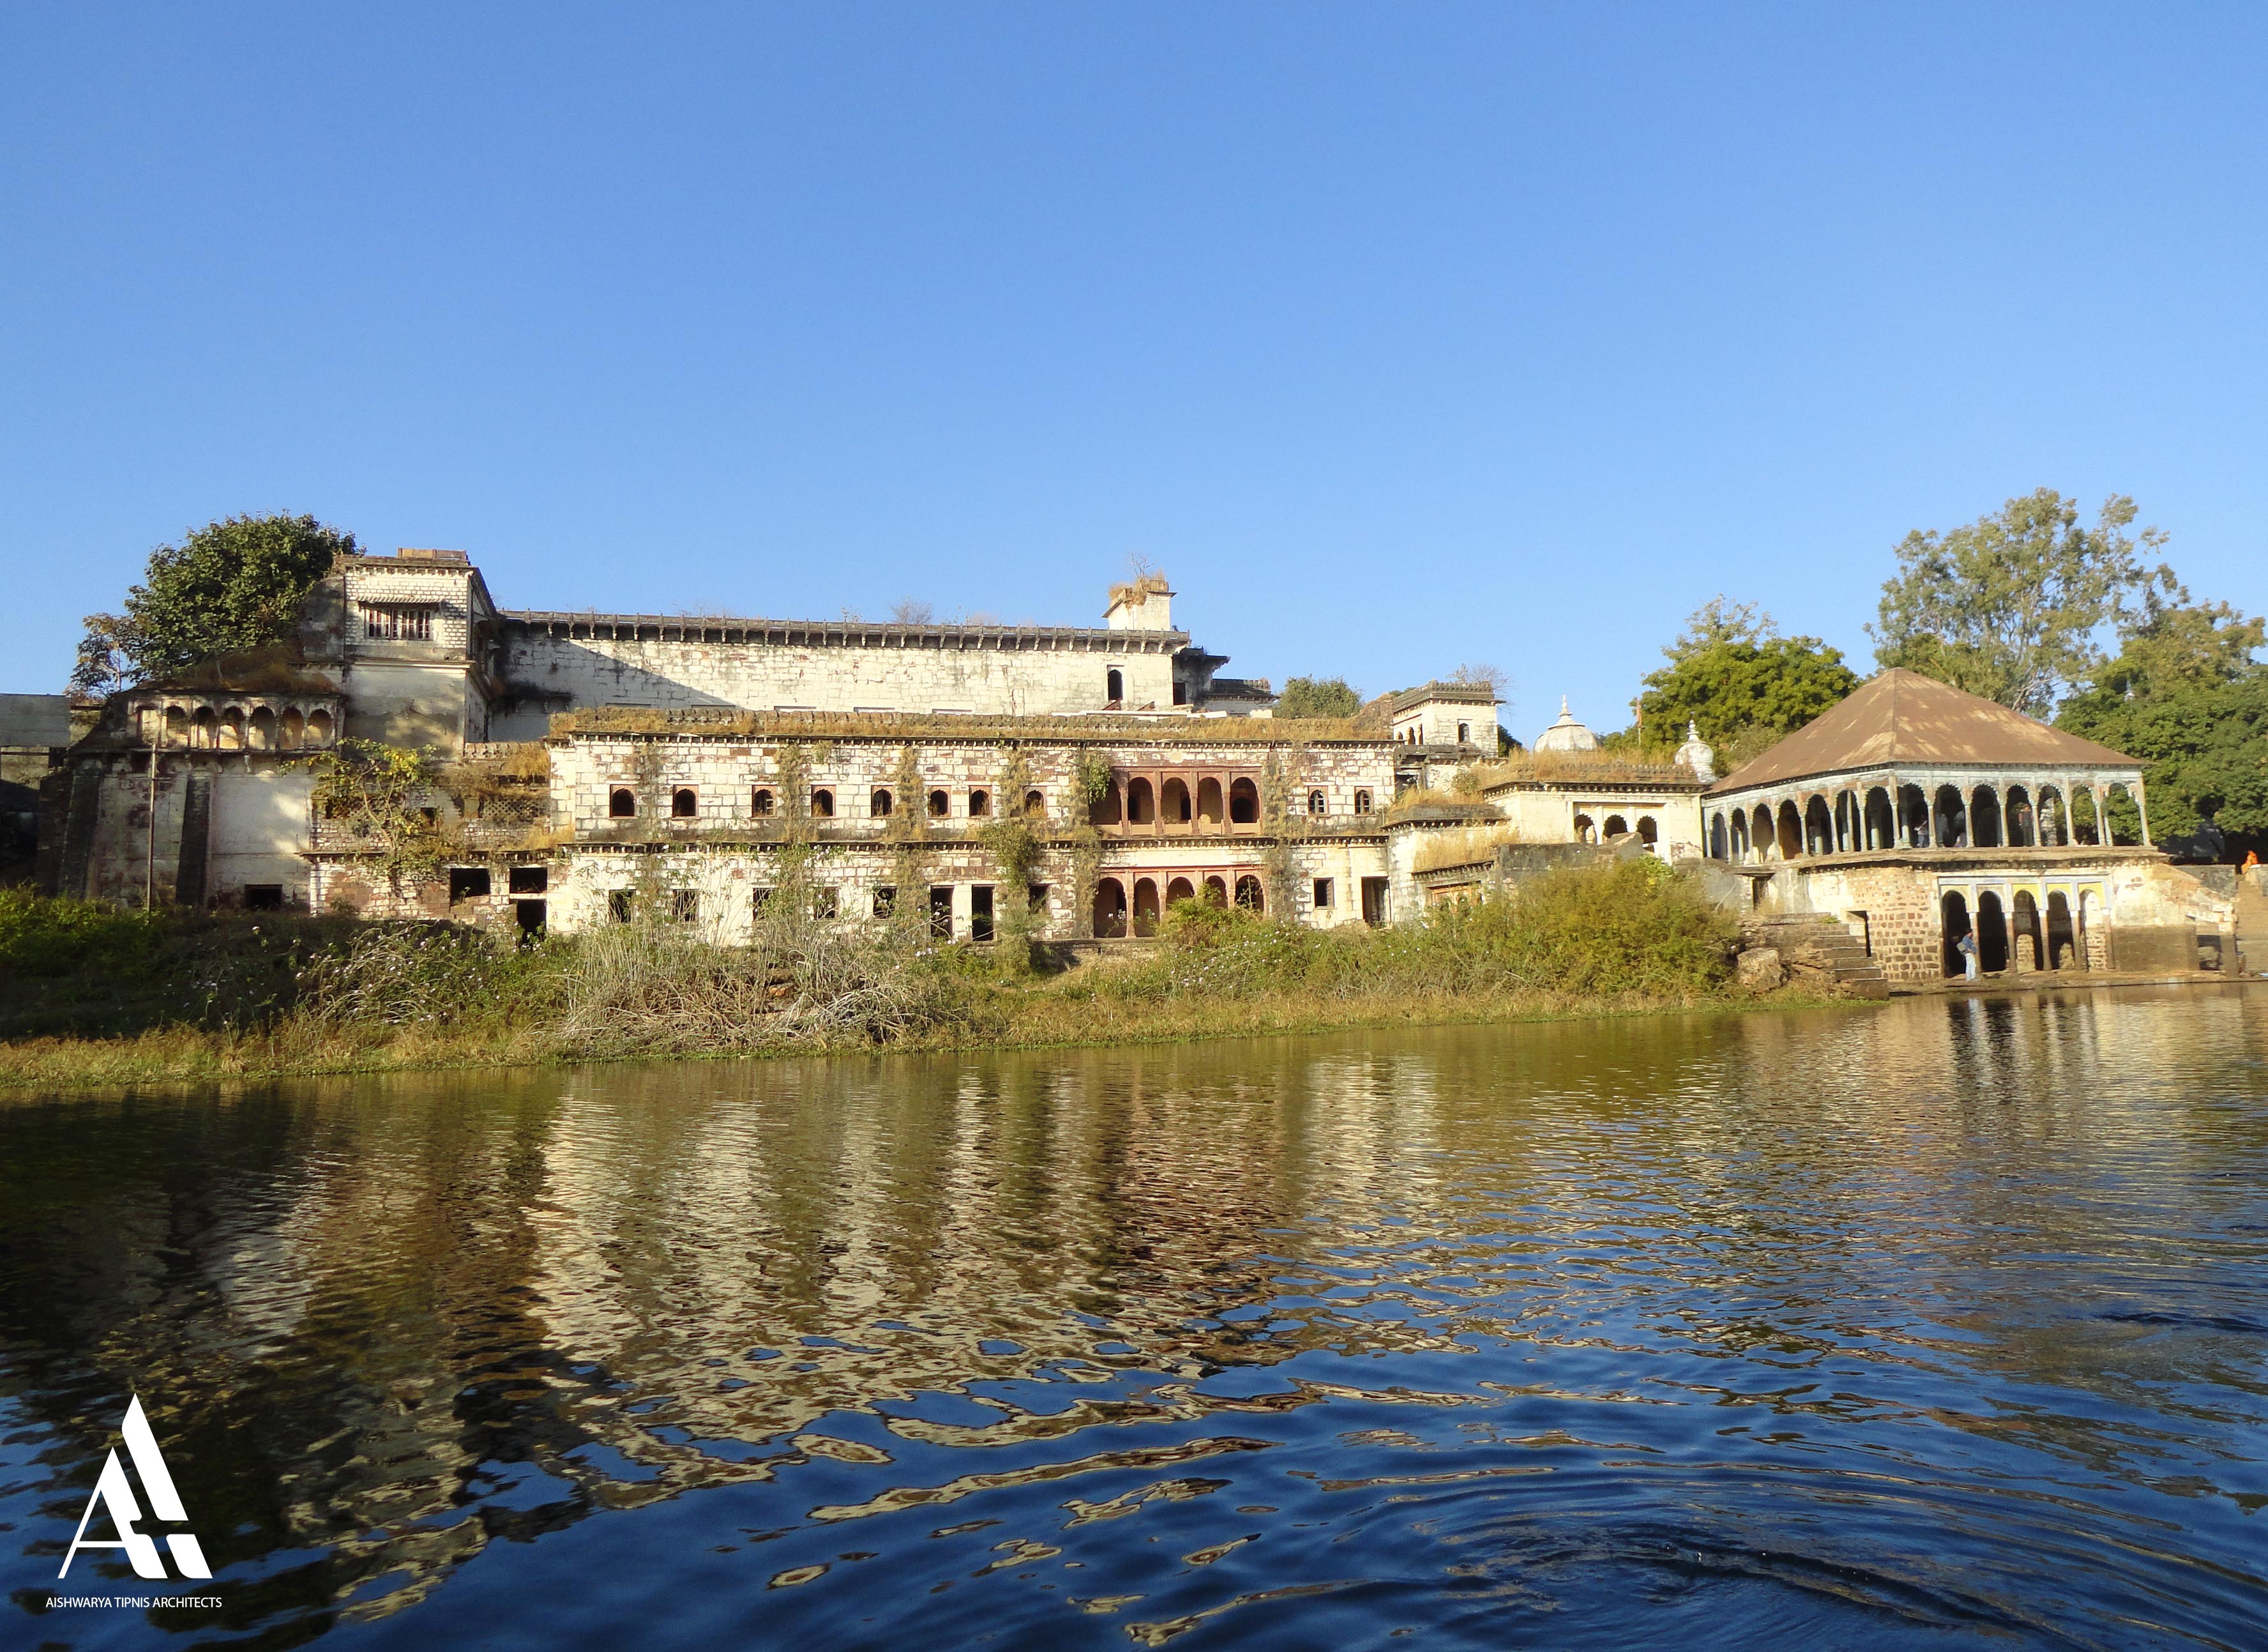 Restoration & Adaptive Reuse of Govindgarh Fort